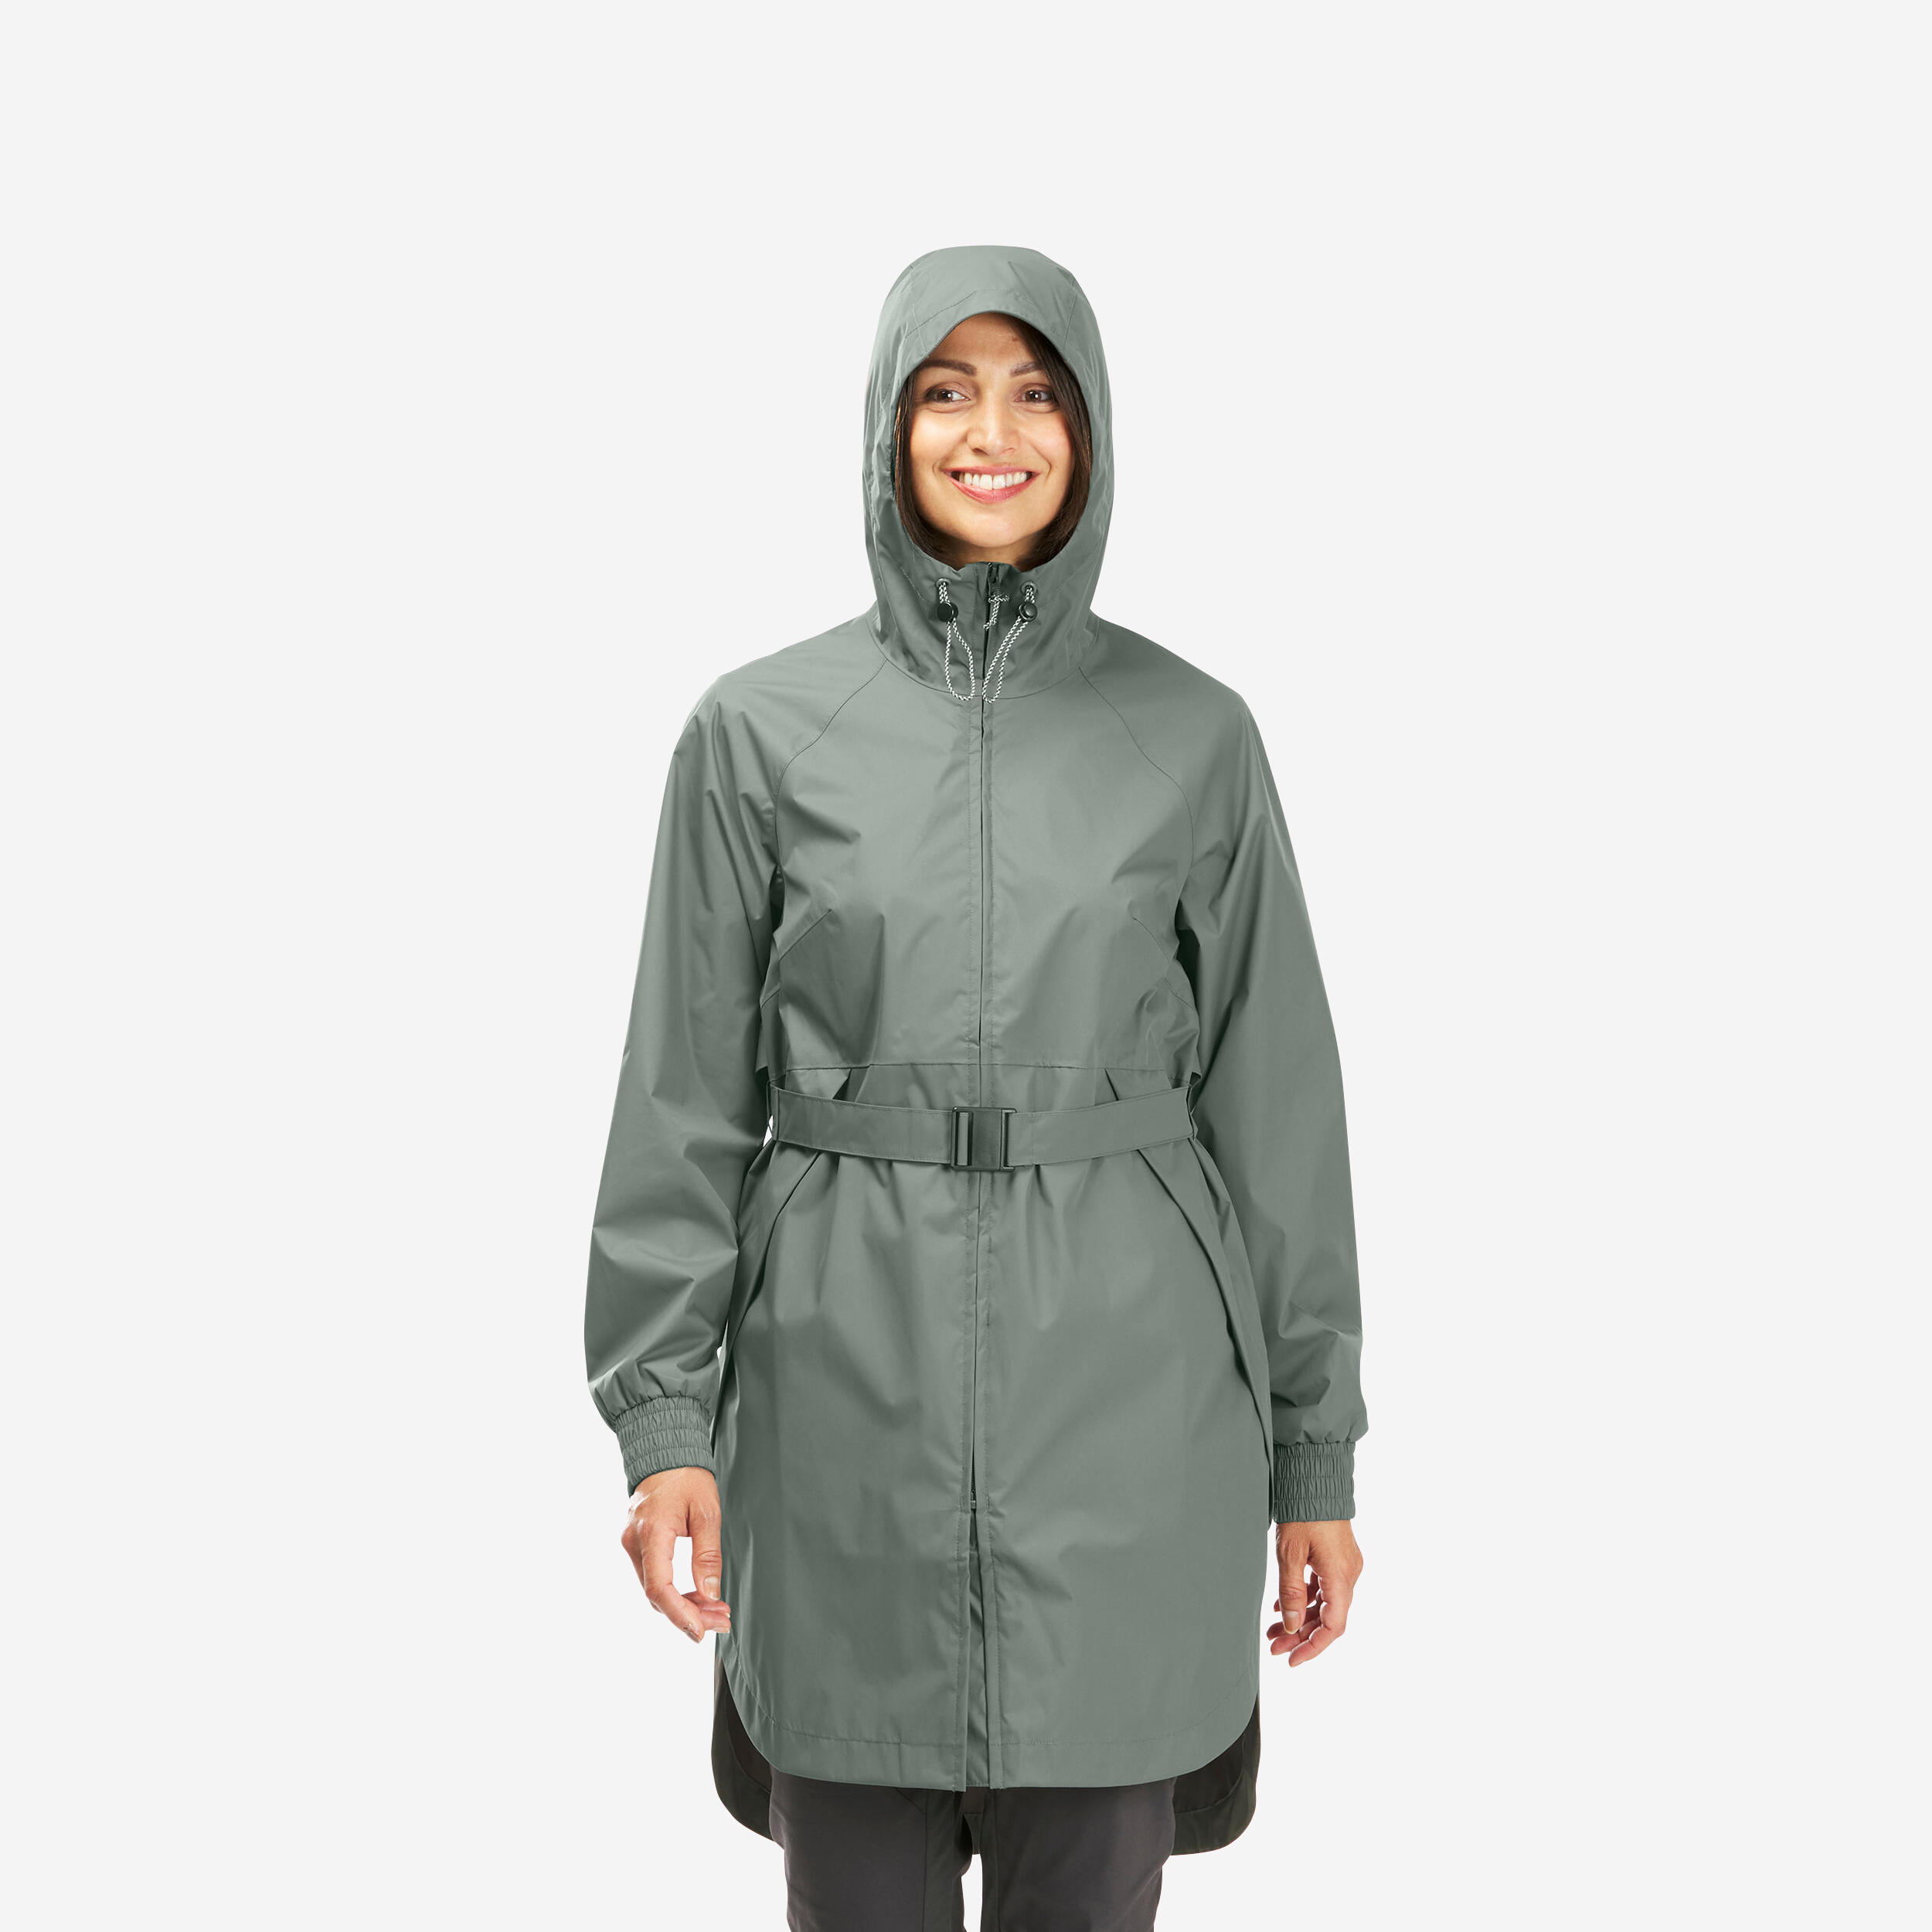 Women’s Hiking Jacket - Raincut Khaki